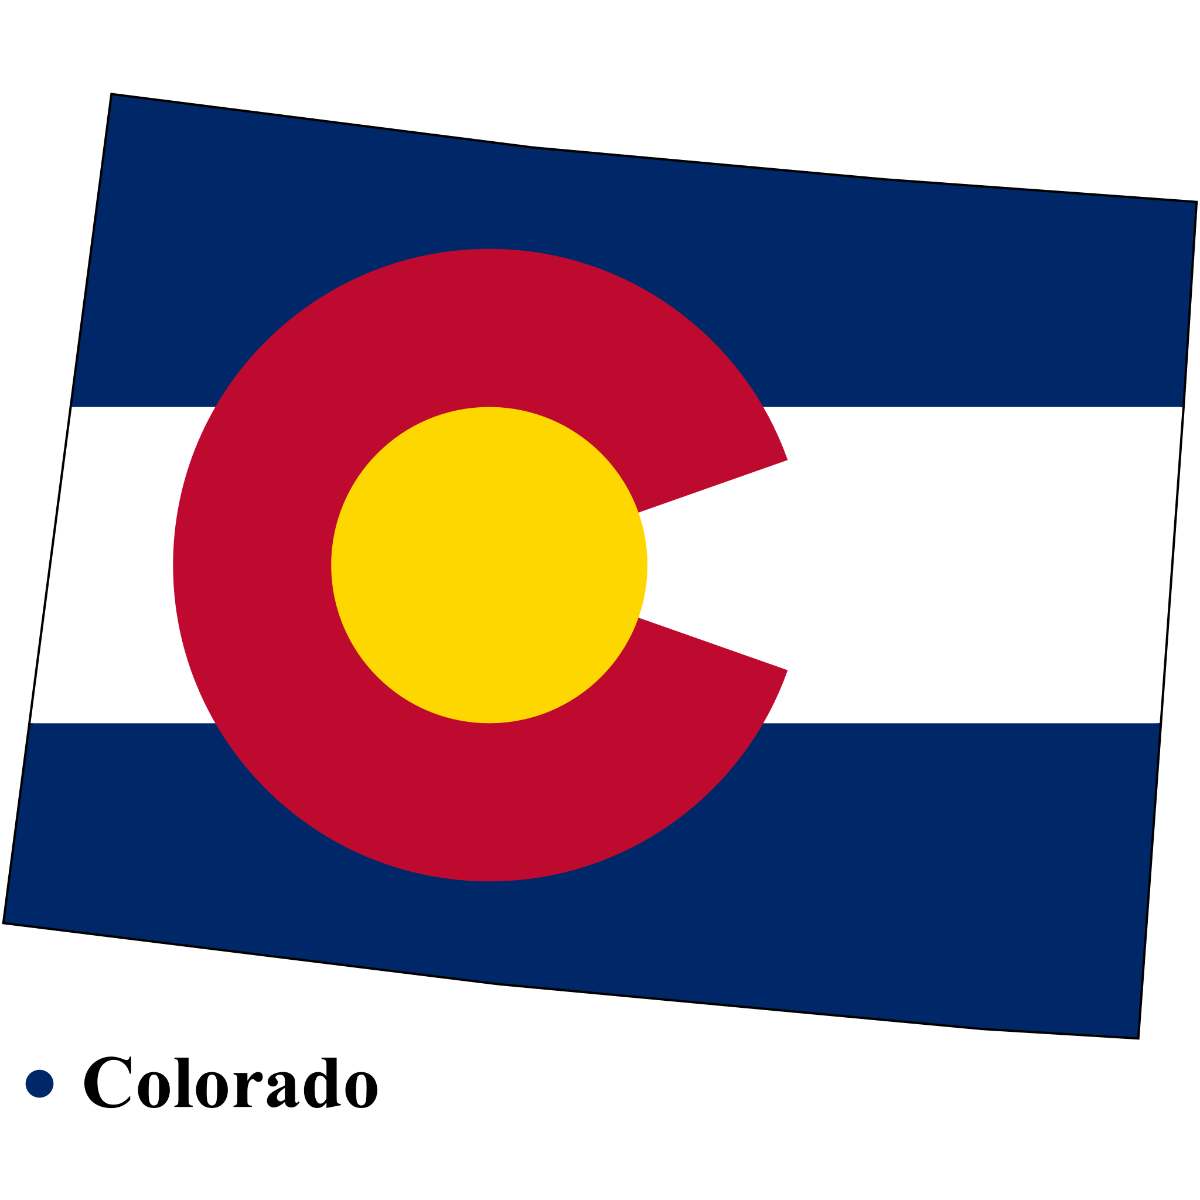 Colorado State map cutout with Colorado flag superimposed